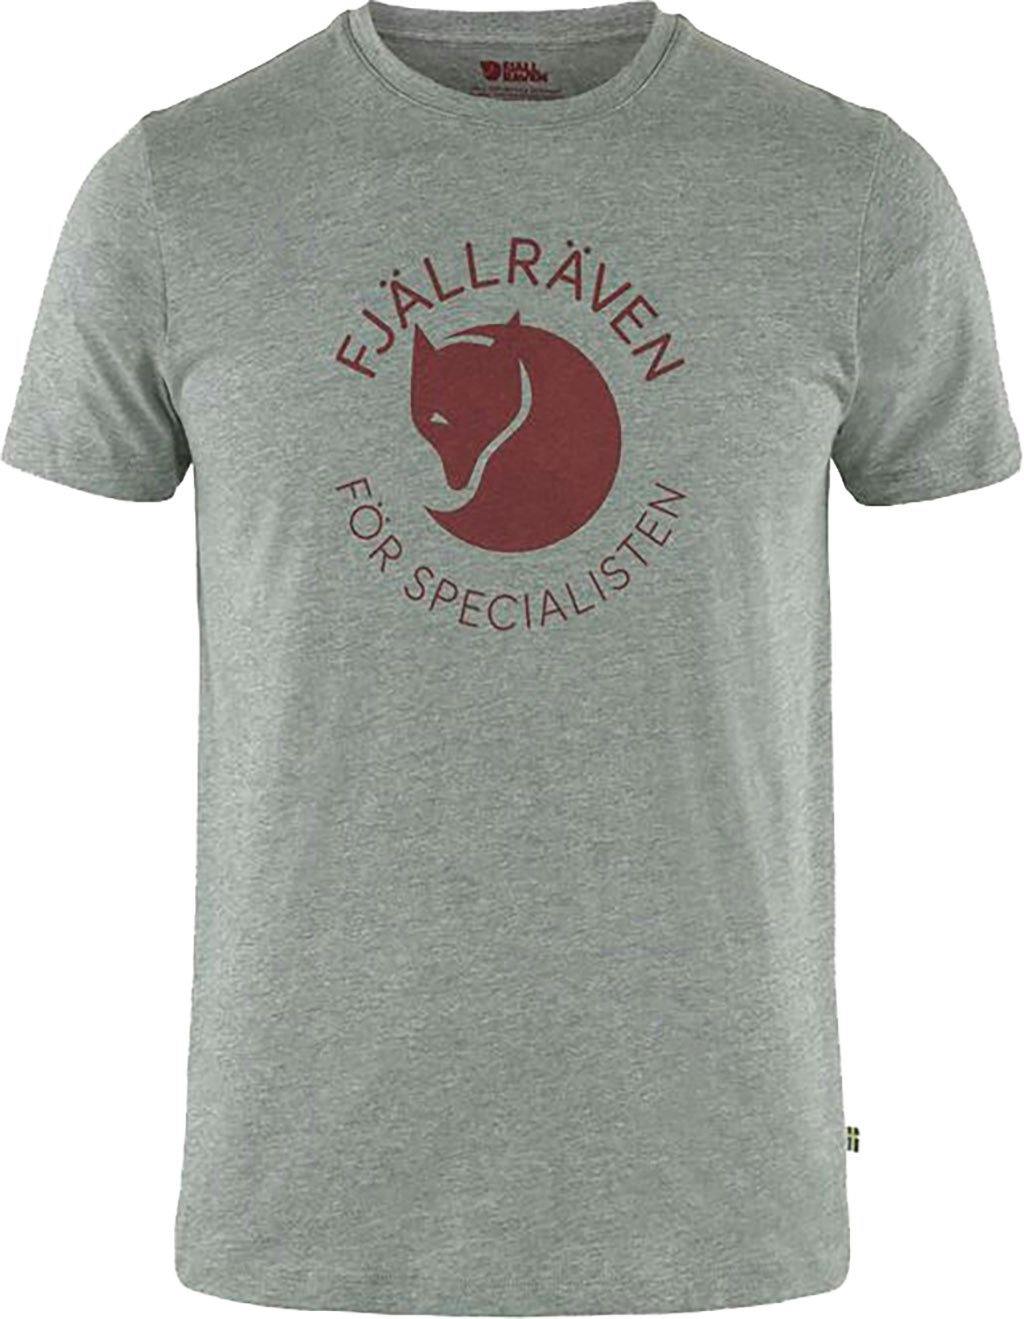 Product image for Fjallraven Fox T-shirt - Men's